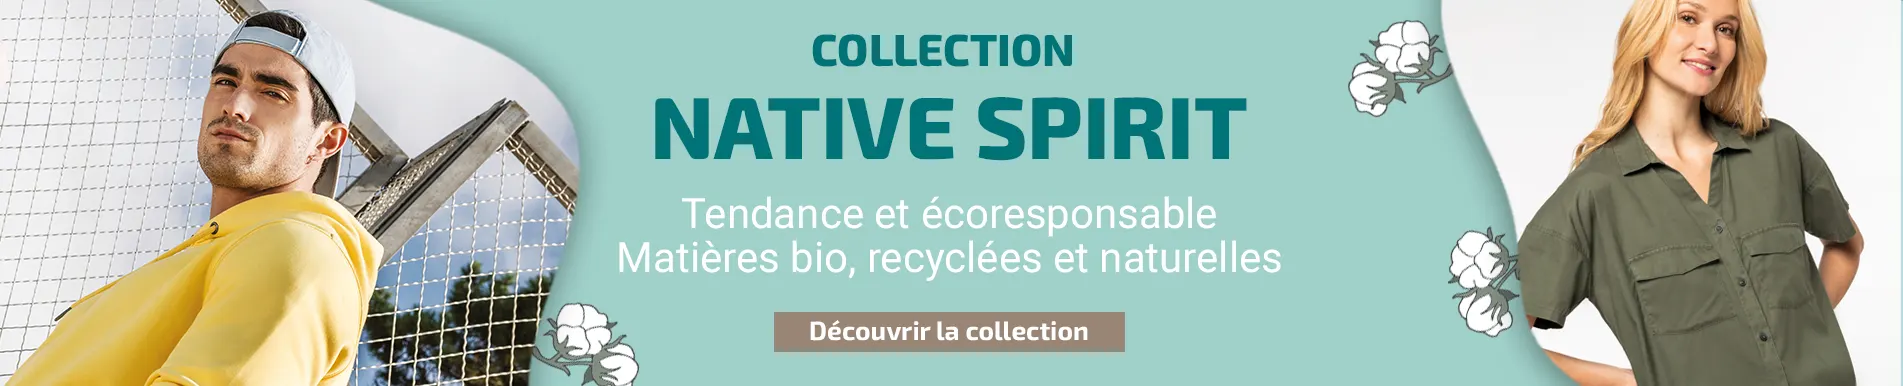 Collection Native Spirit